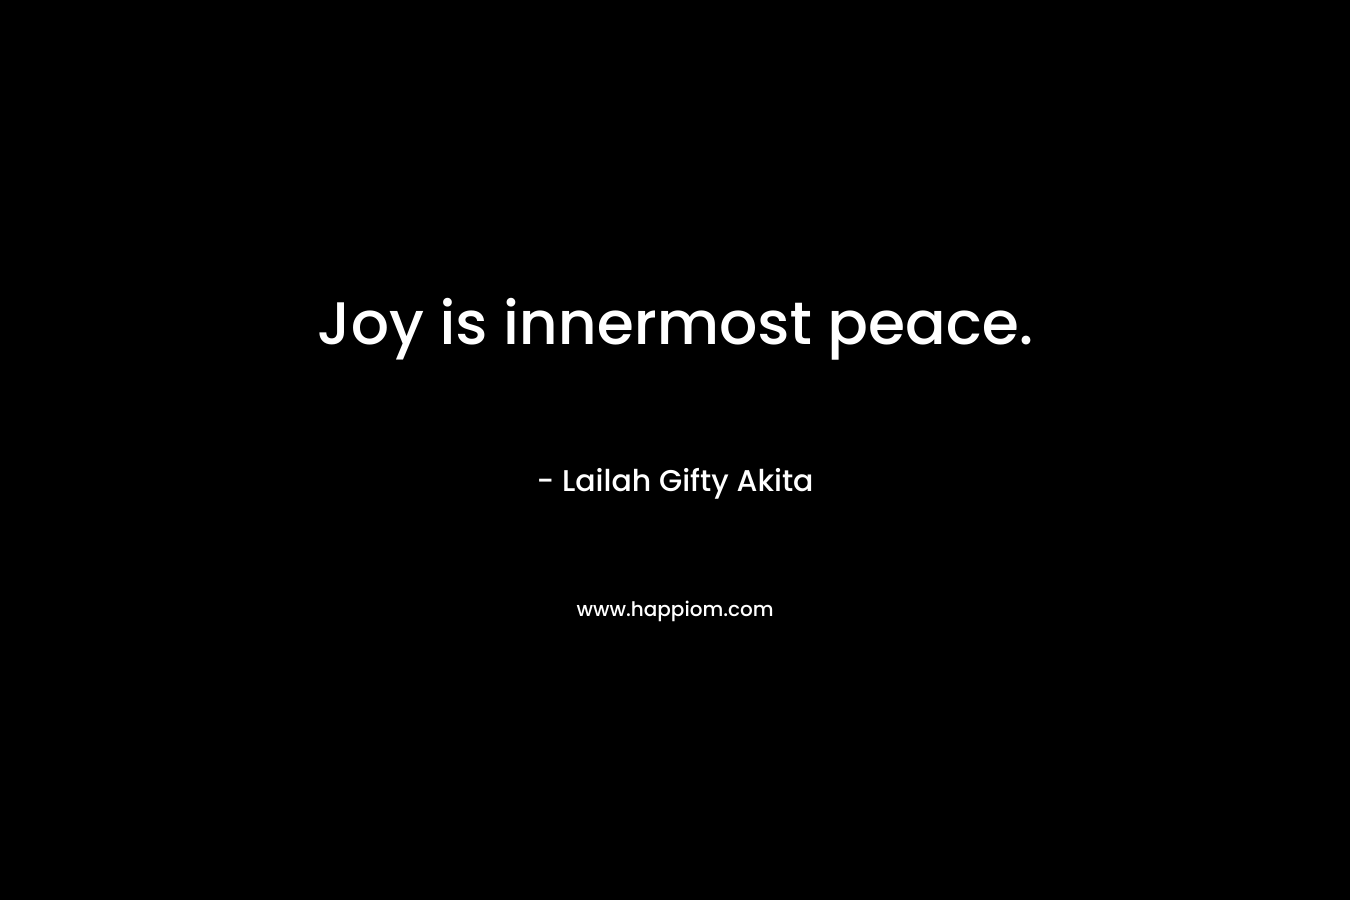 Joy is innermost peace.